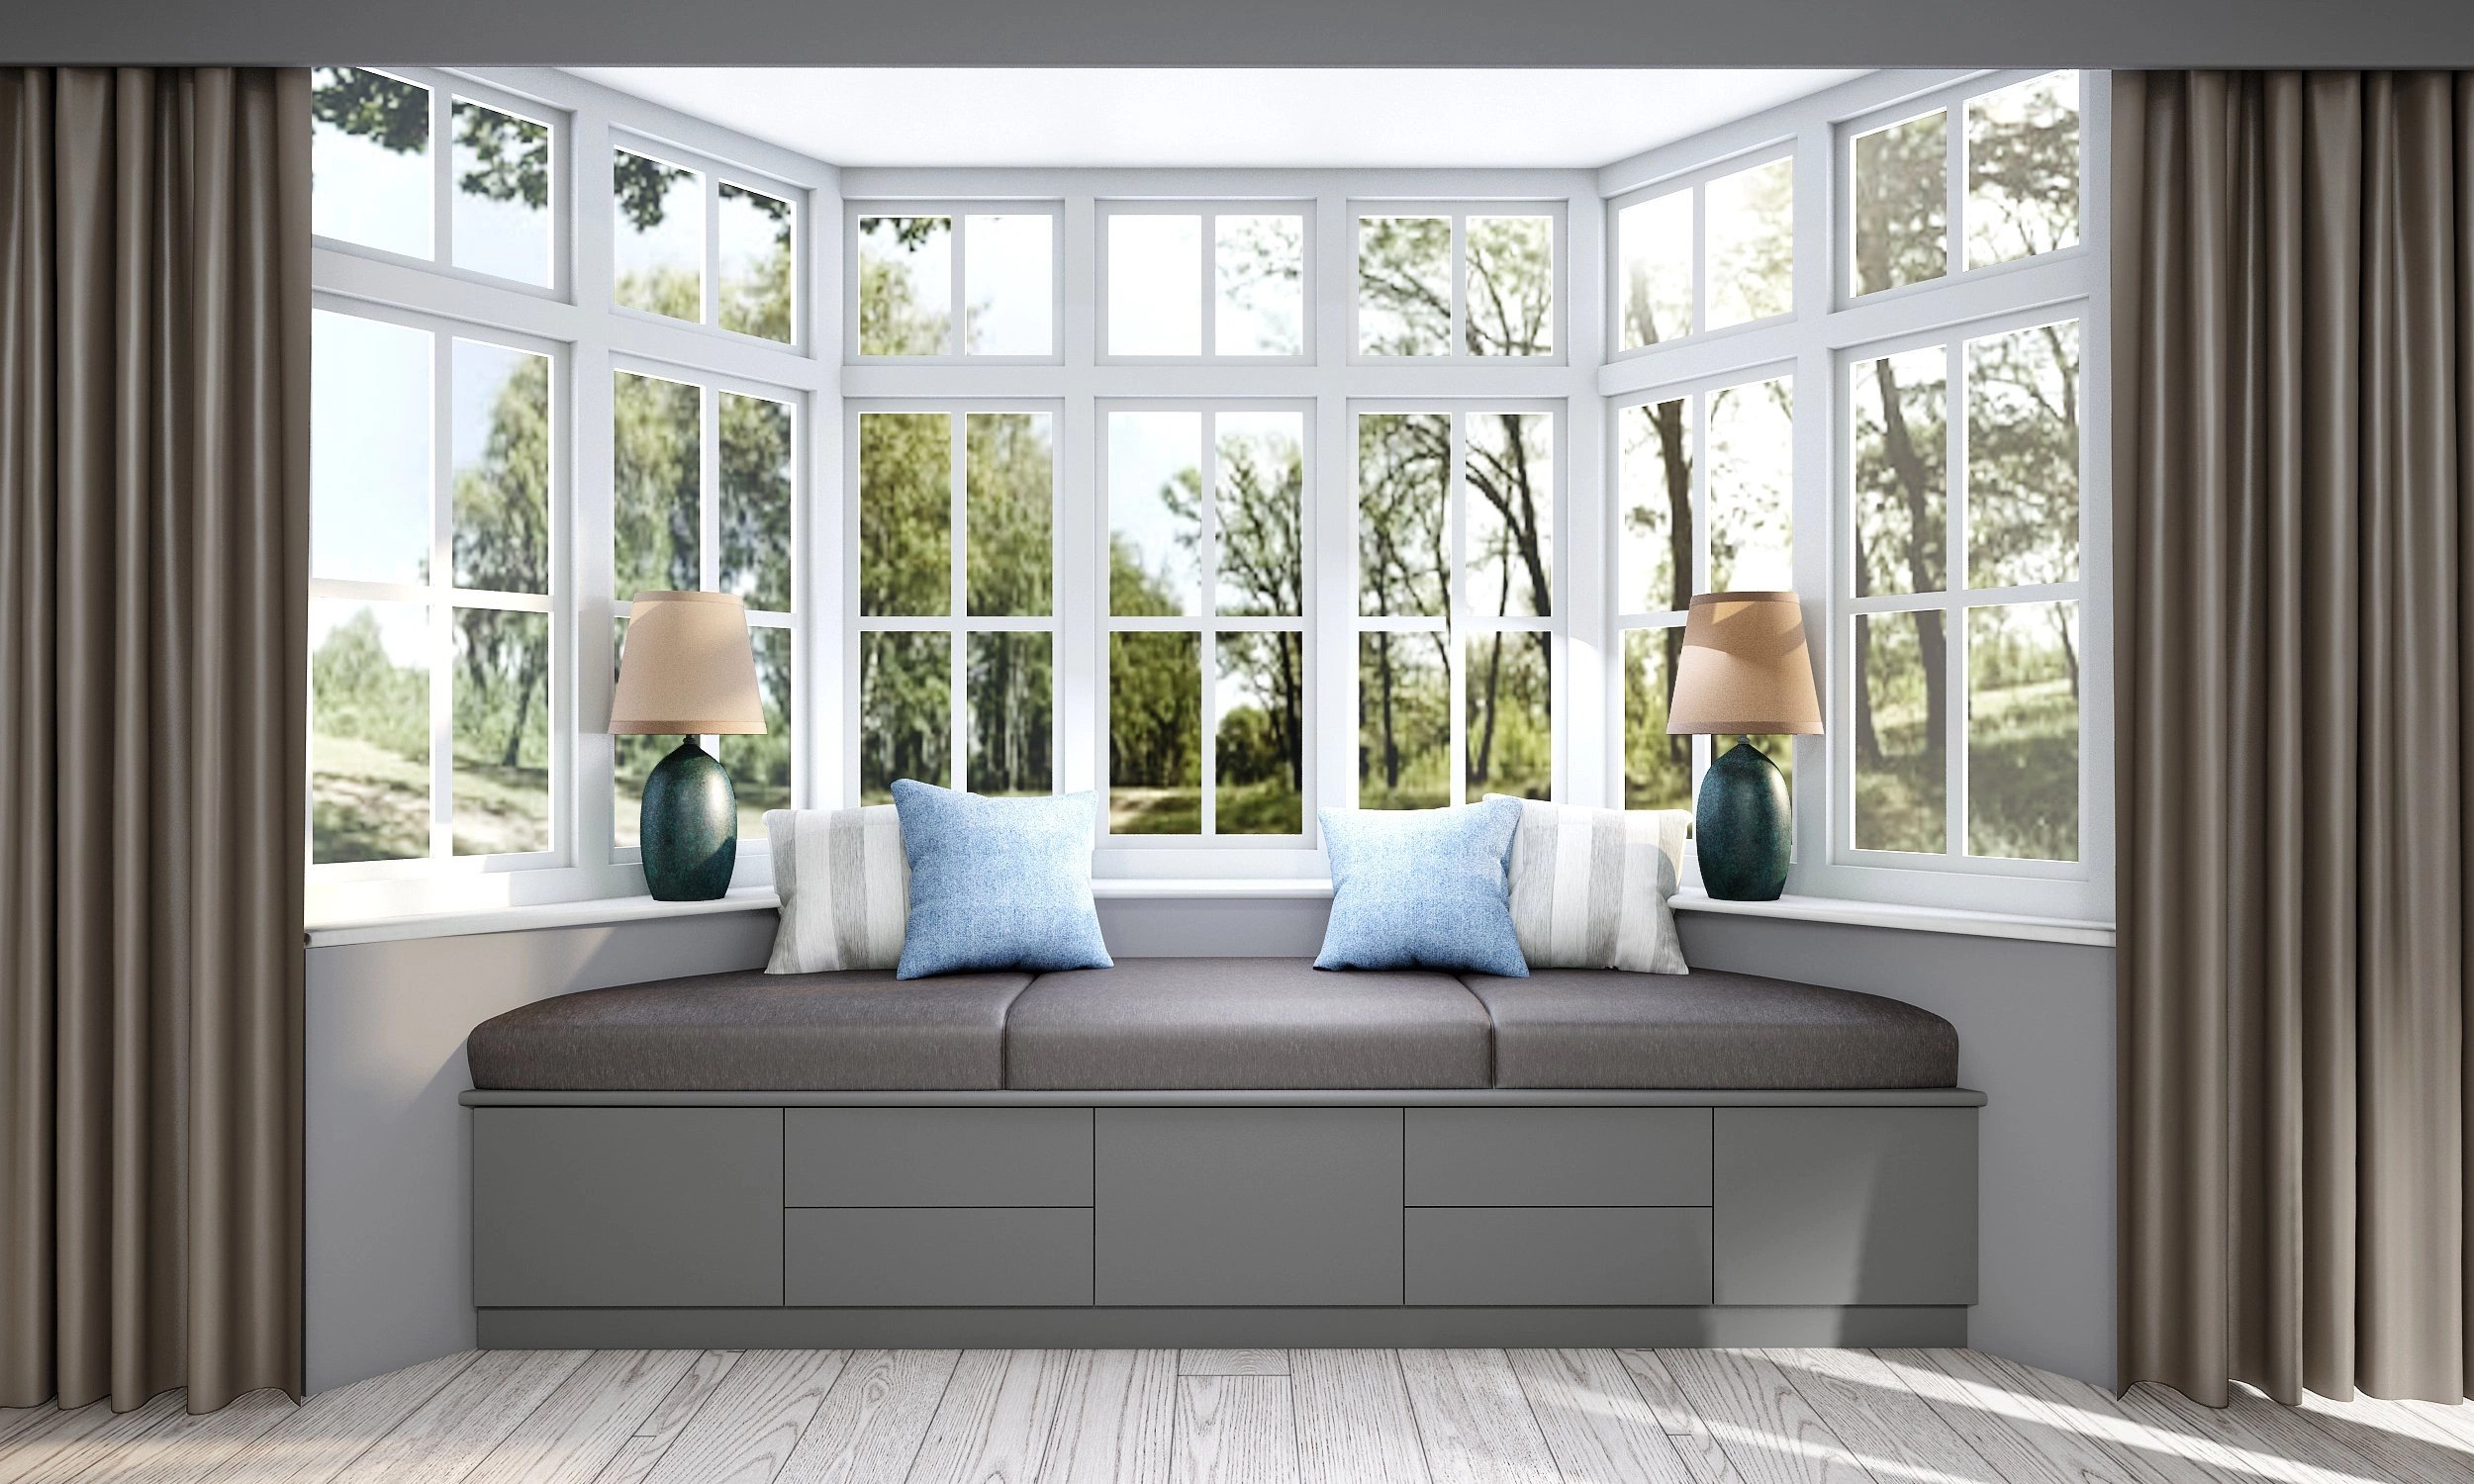 Bespoke Furniture | Bespoke Home Furniture | Inspired Elements | London